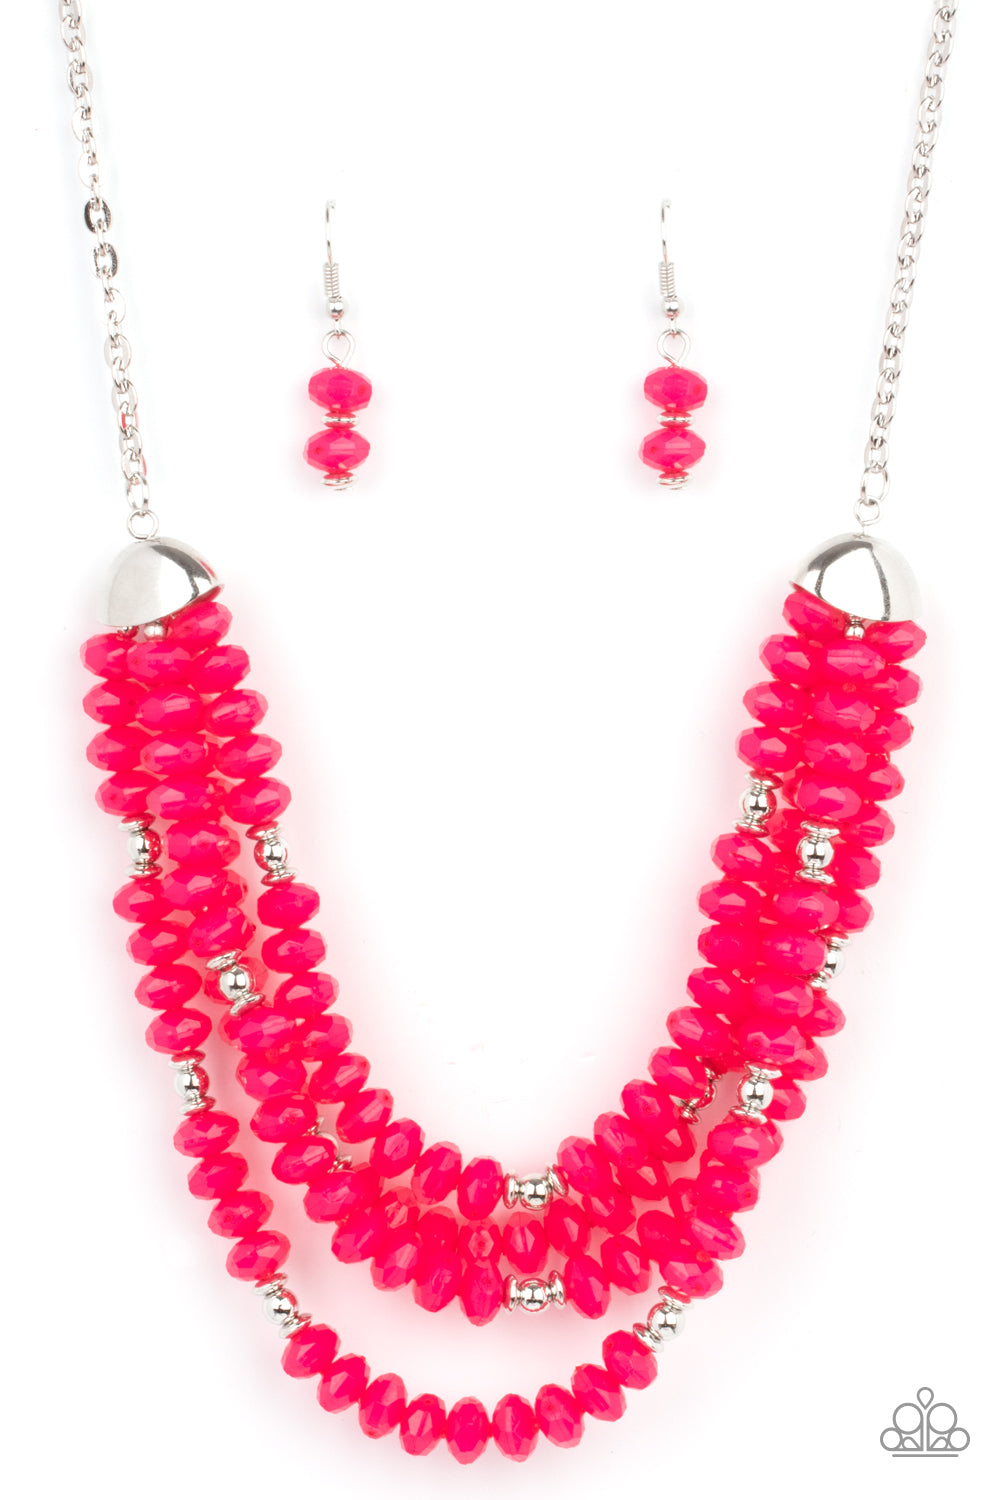 five-dollar-jewelry-best-posh-ible-taste-pink-paparazzi-accessories